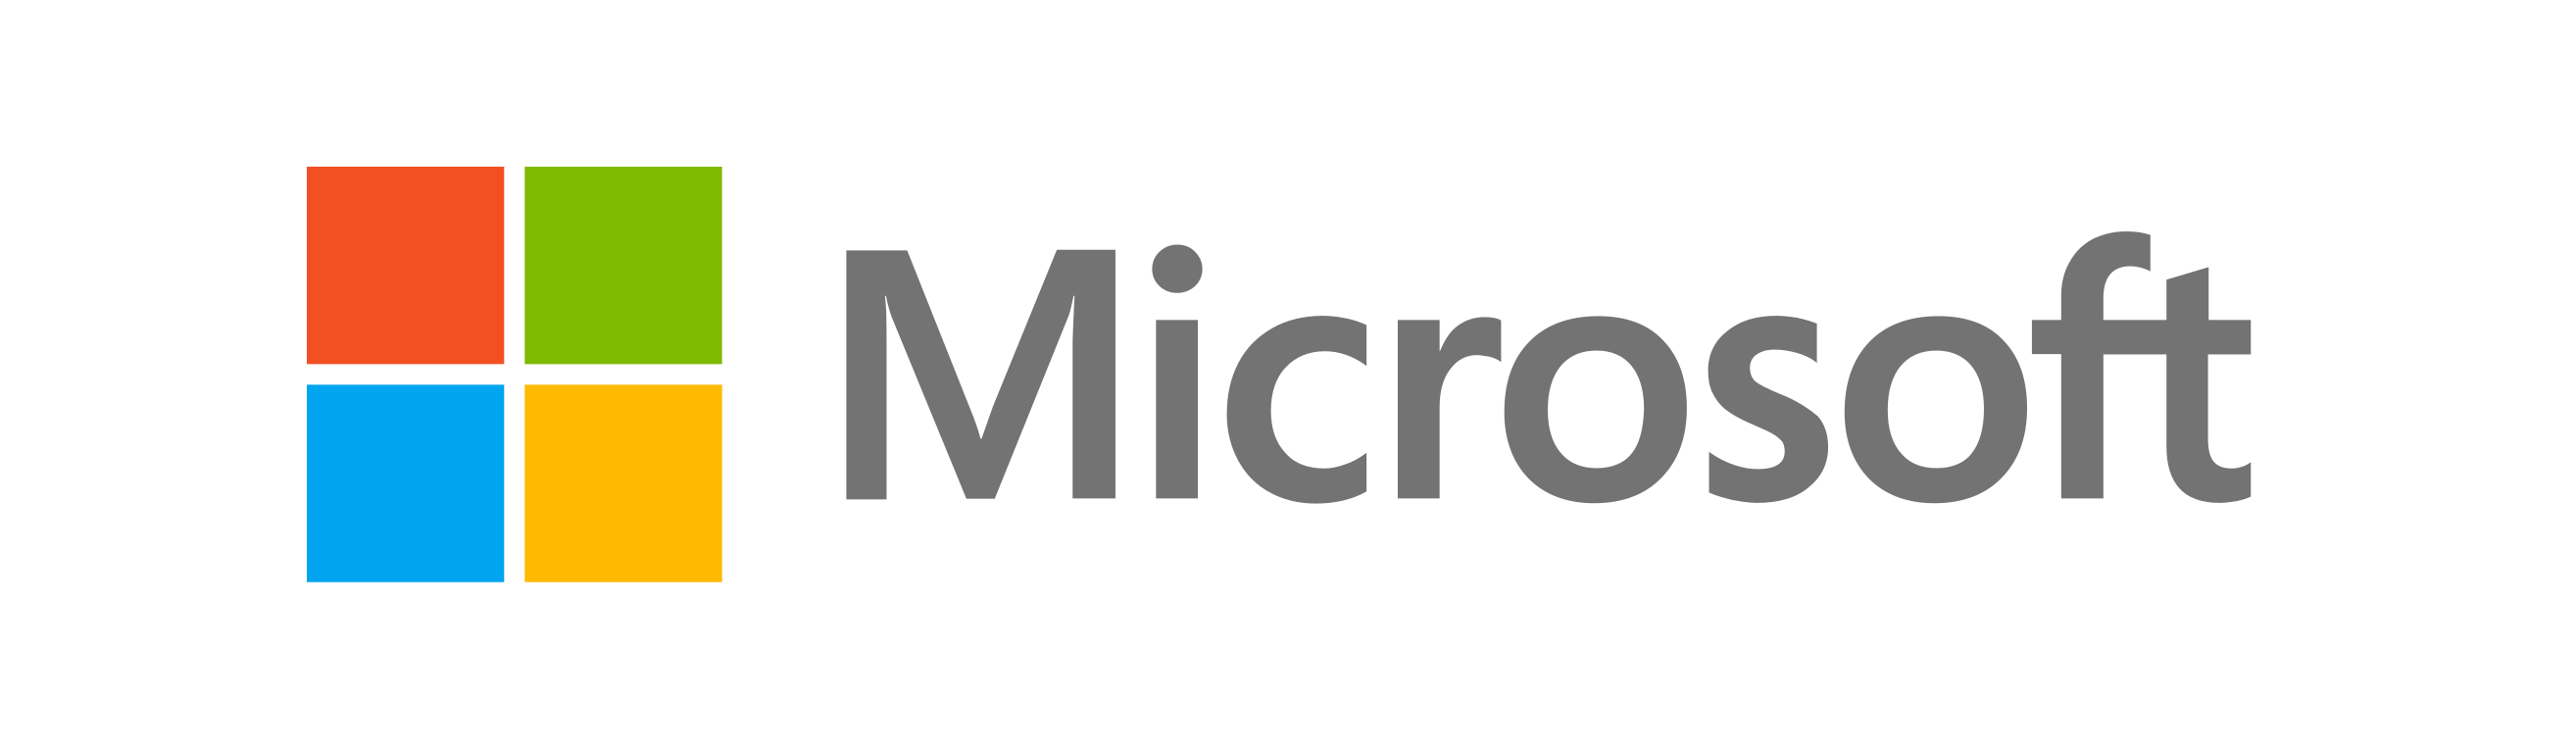 Microsoft-Logo_